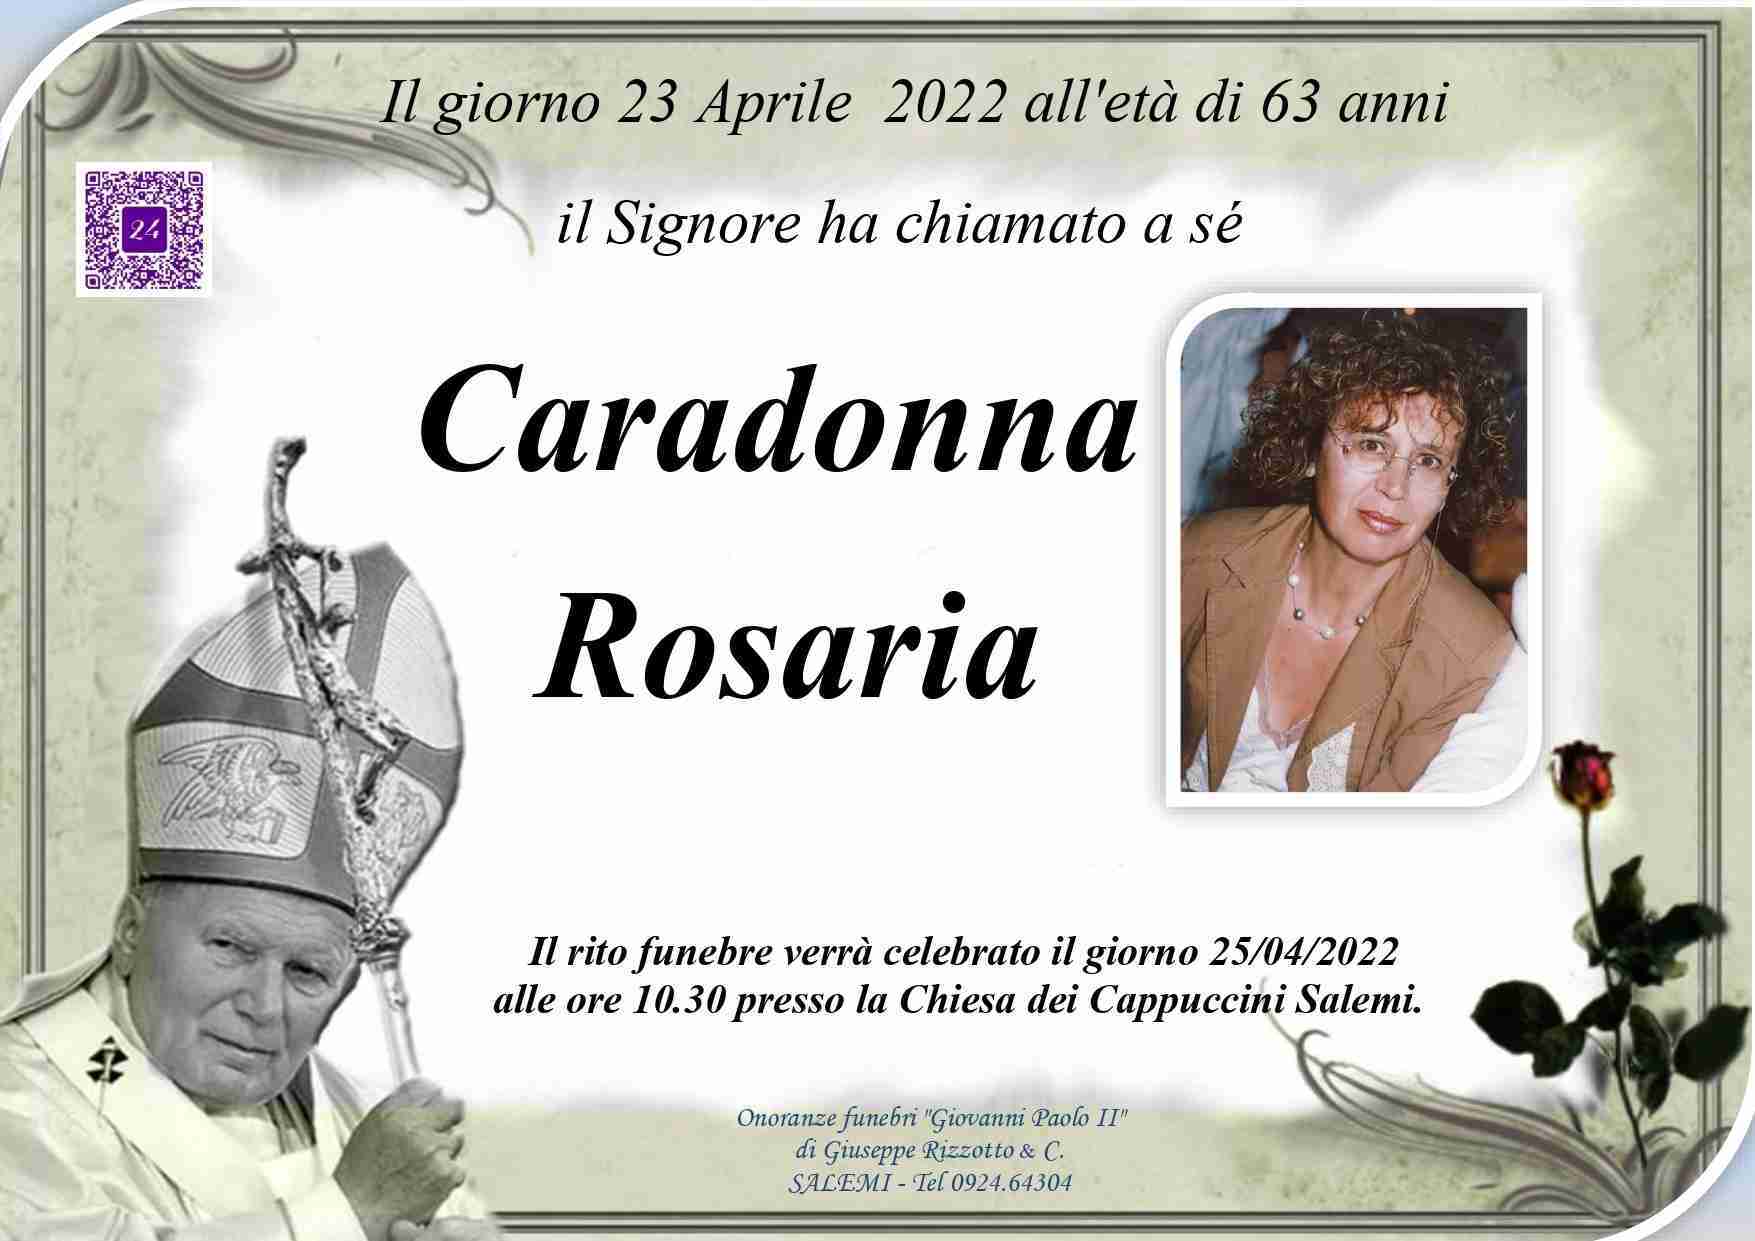 Rosaria Caradonna